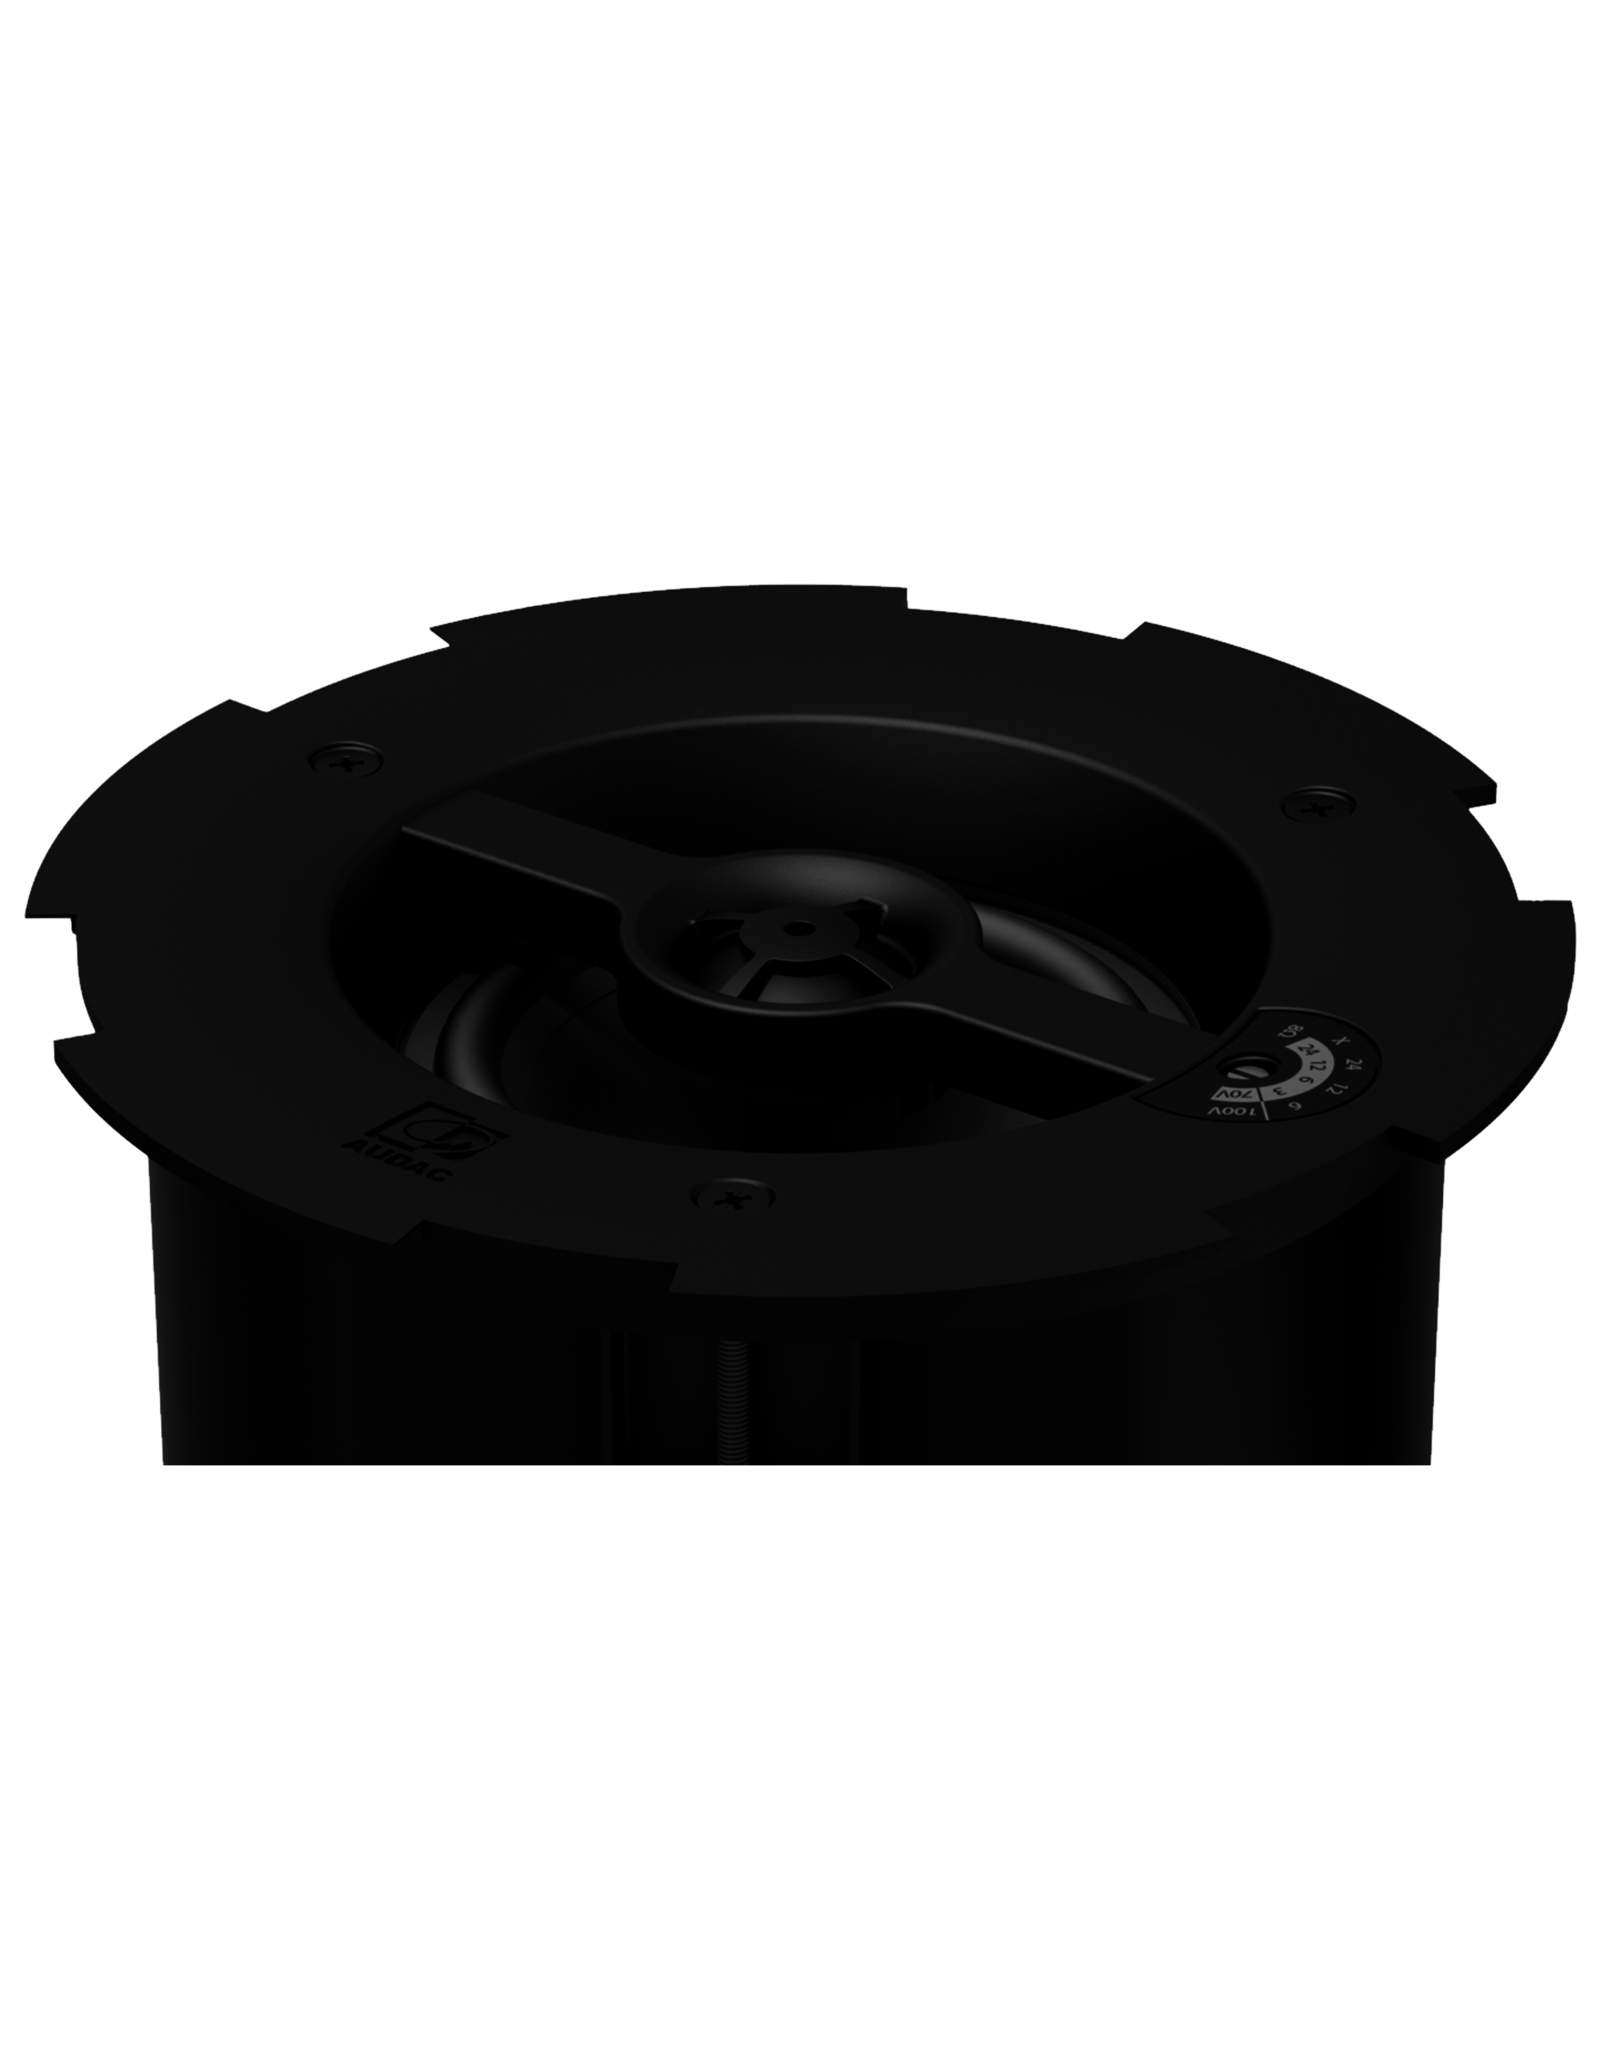 Audac Safelatch™ 2-way 4" ceiling speaker with Twist-Fix™ grill White